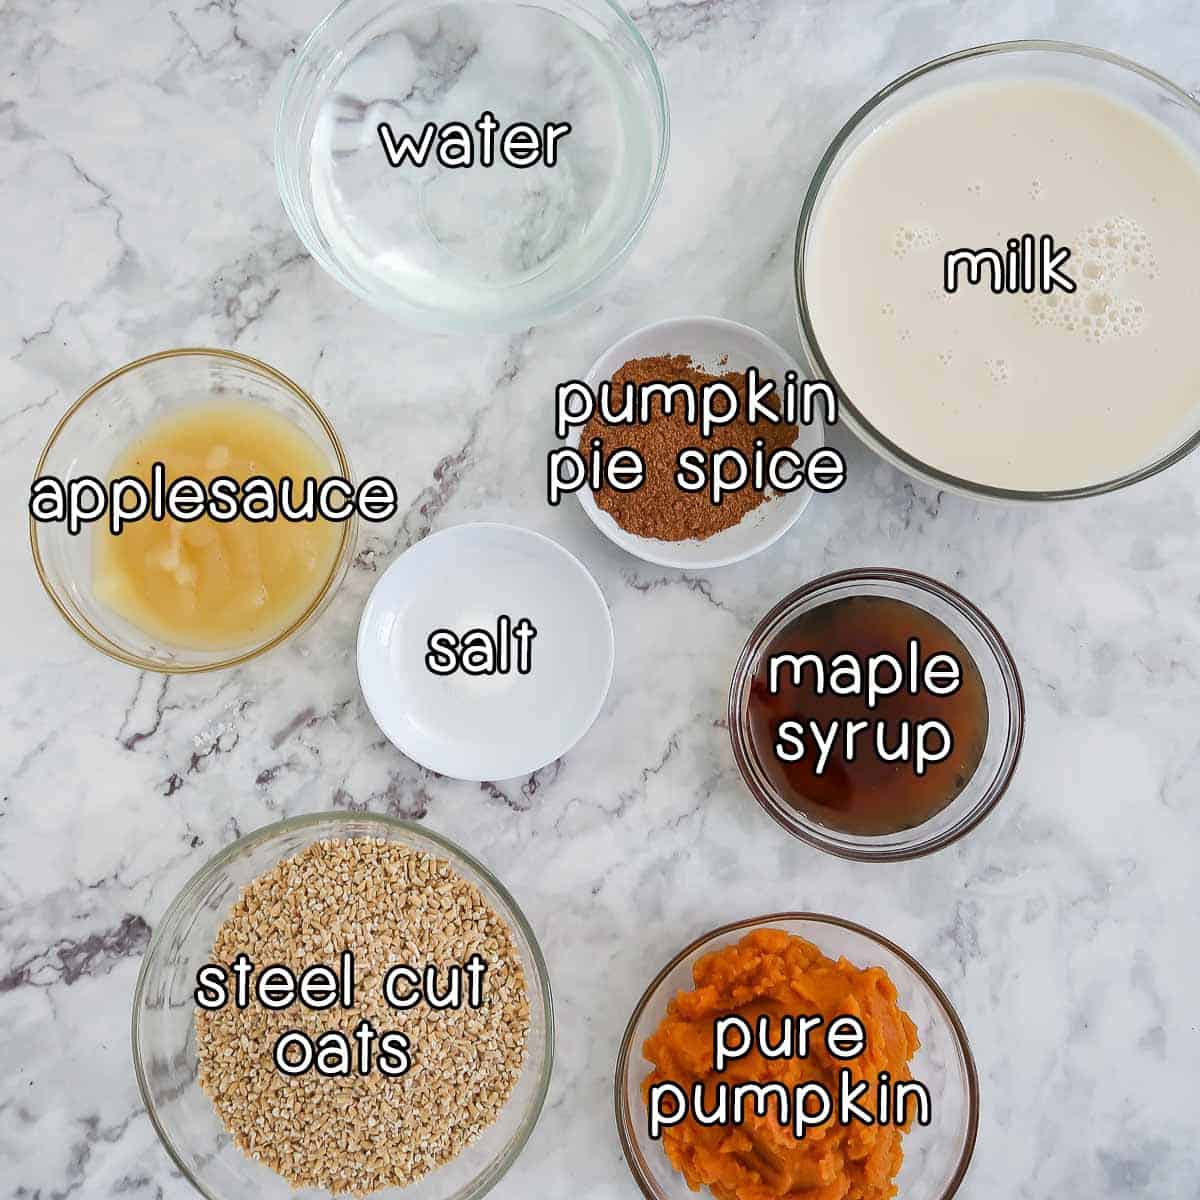 Overhead shot of ingredients- milk, water, applesauce, pumpkin pie spice, salt, maple syrup, pure pumpkin, and steel cut oats.